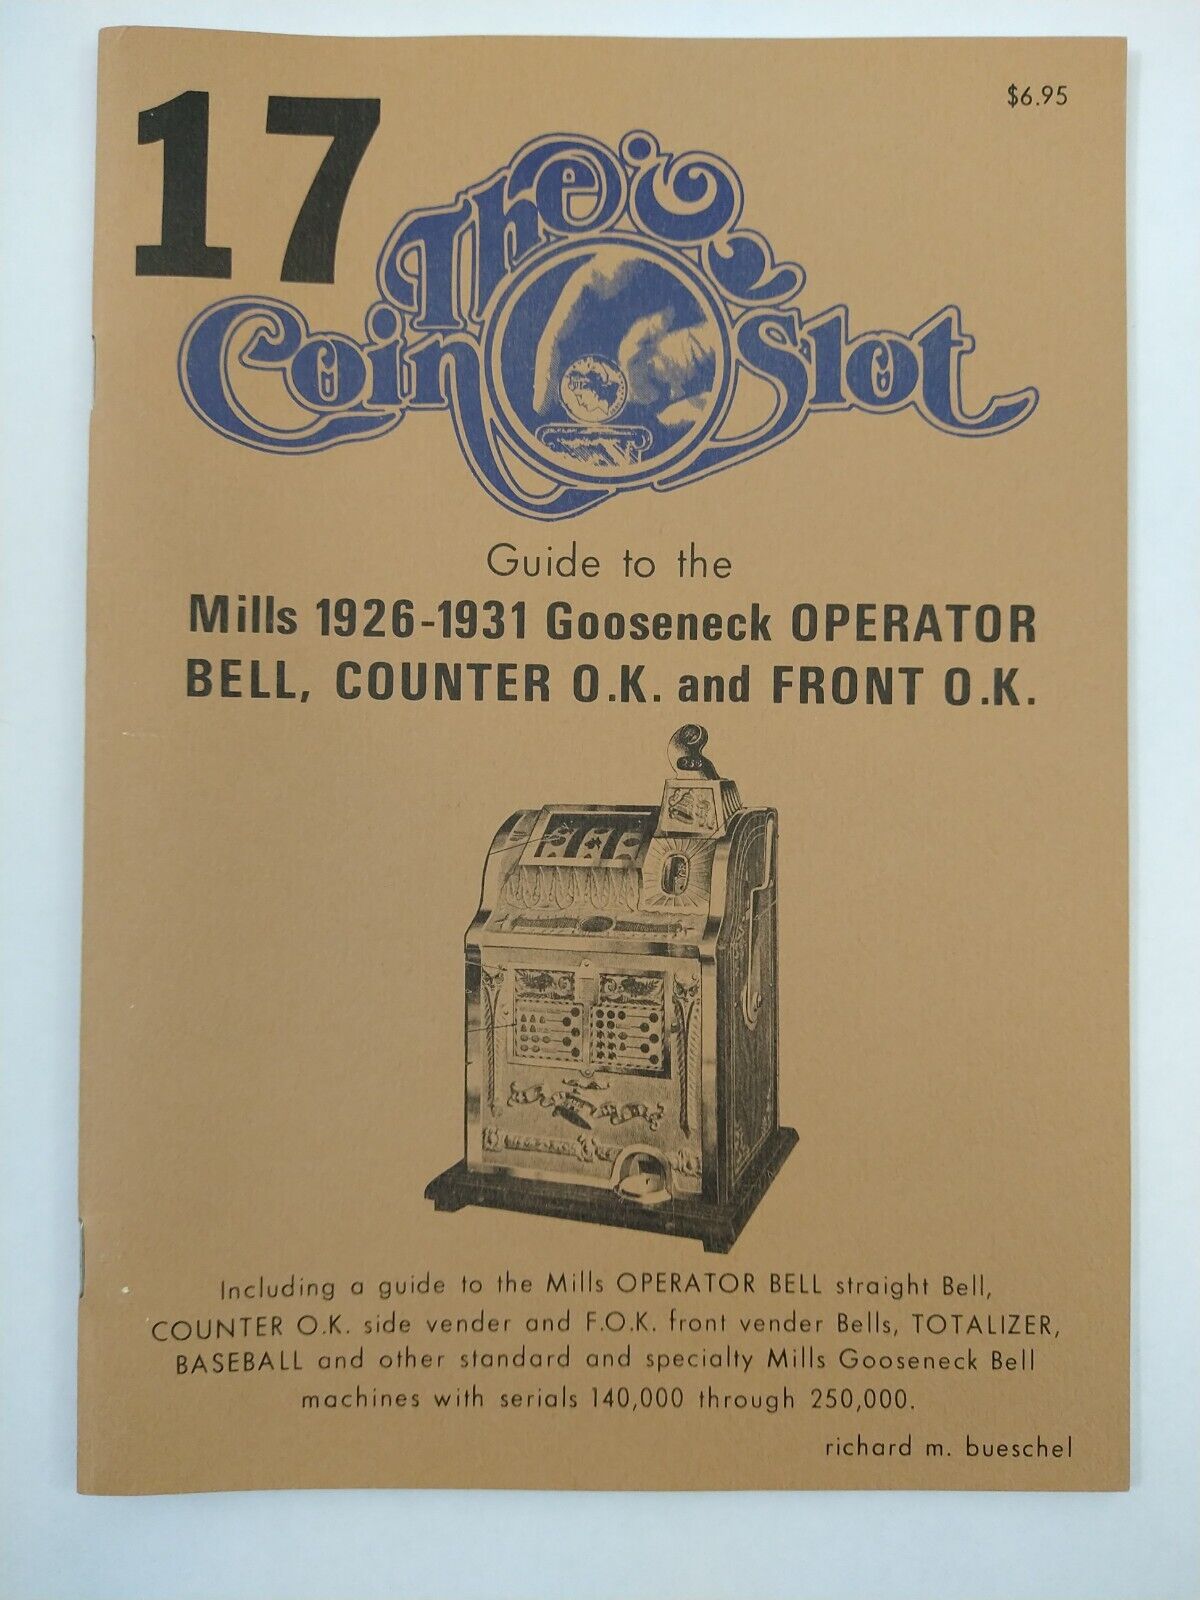 #17 The Coin Slot Guide to the Mills Gooseneck Operator Richard M. Bueschel